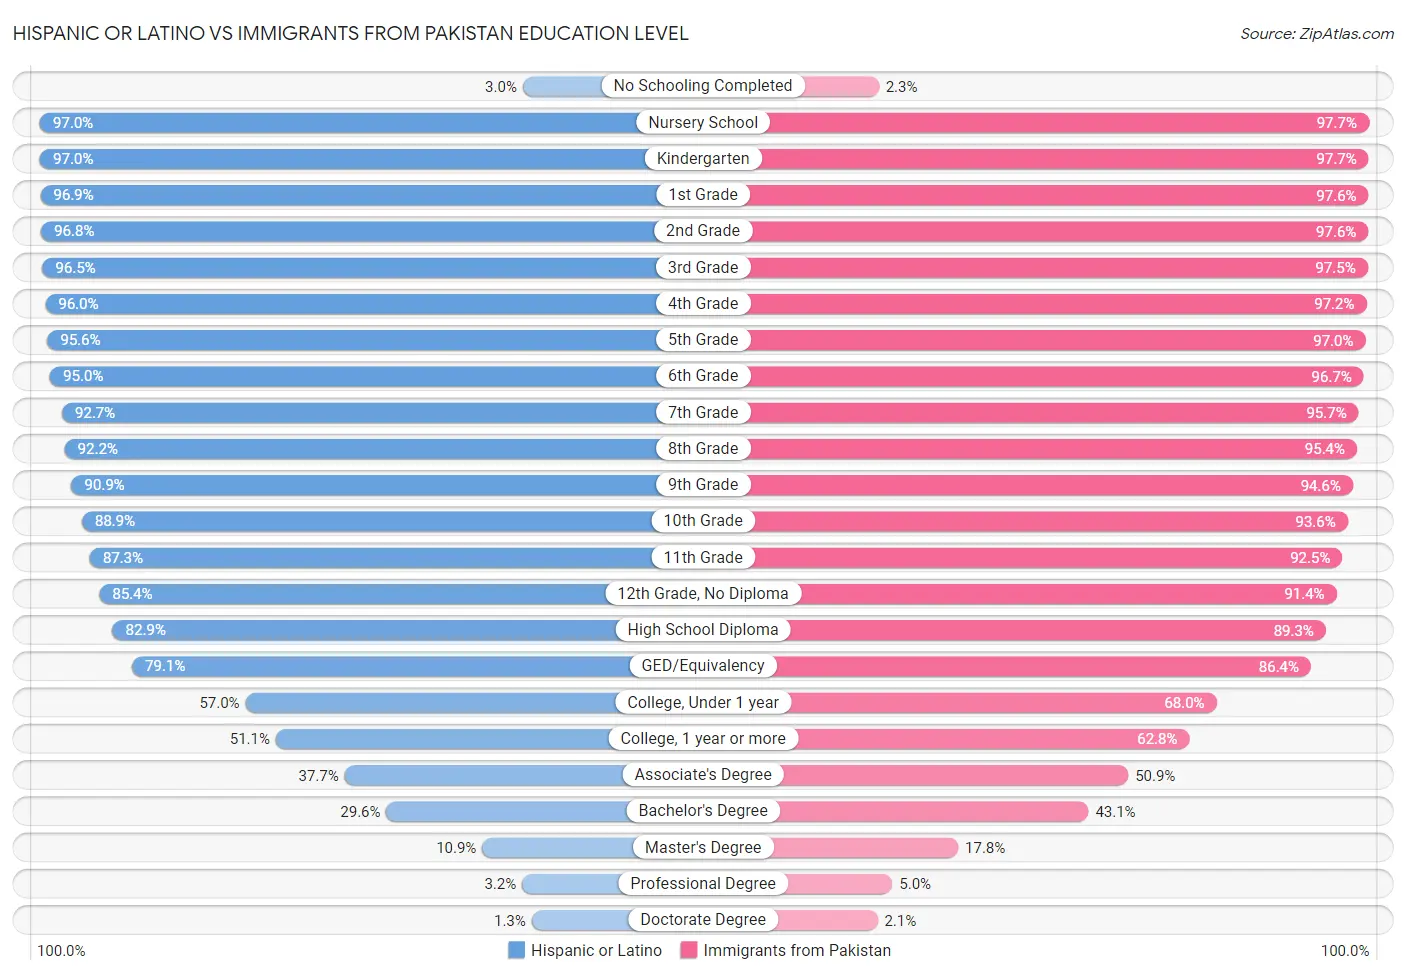 Hispanic or Latino vs Immigrants from Pakistan Education Level